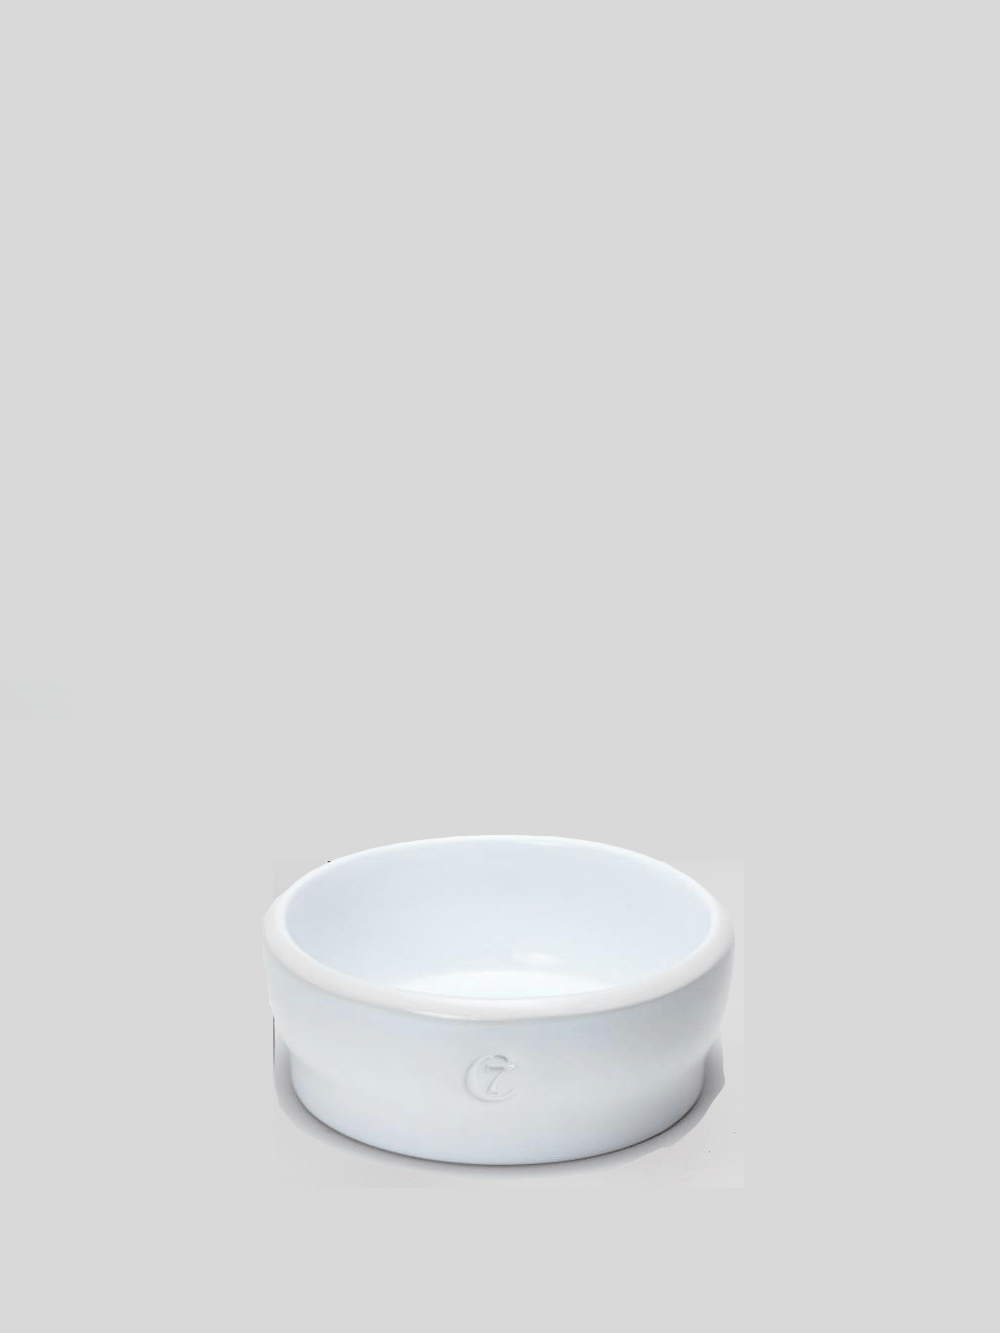 Dog Bowl - White Dog Bowl Cloud7 